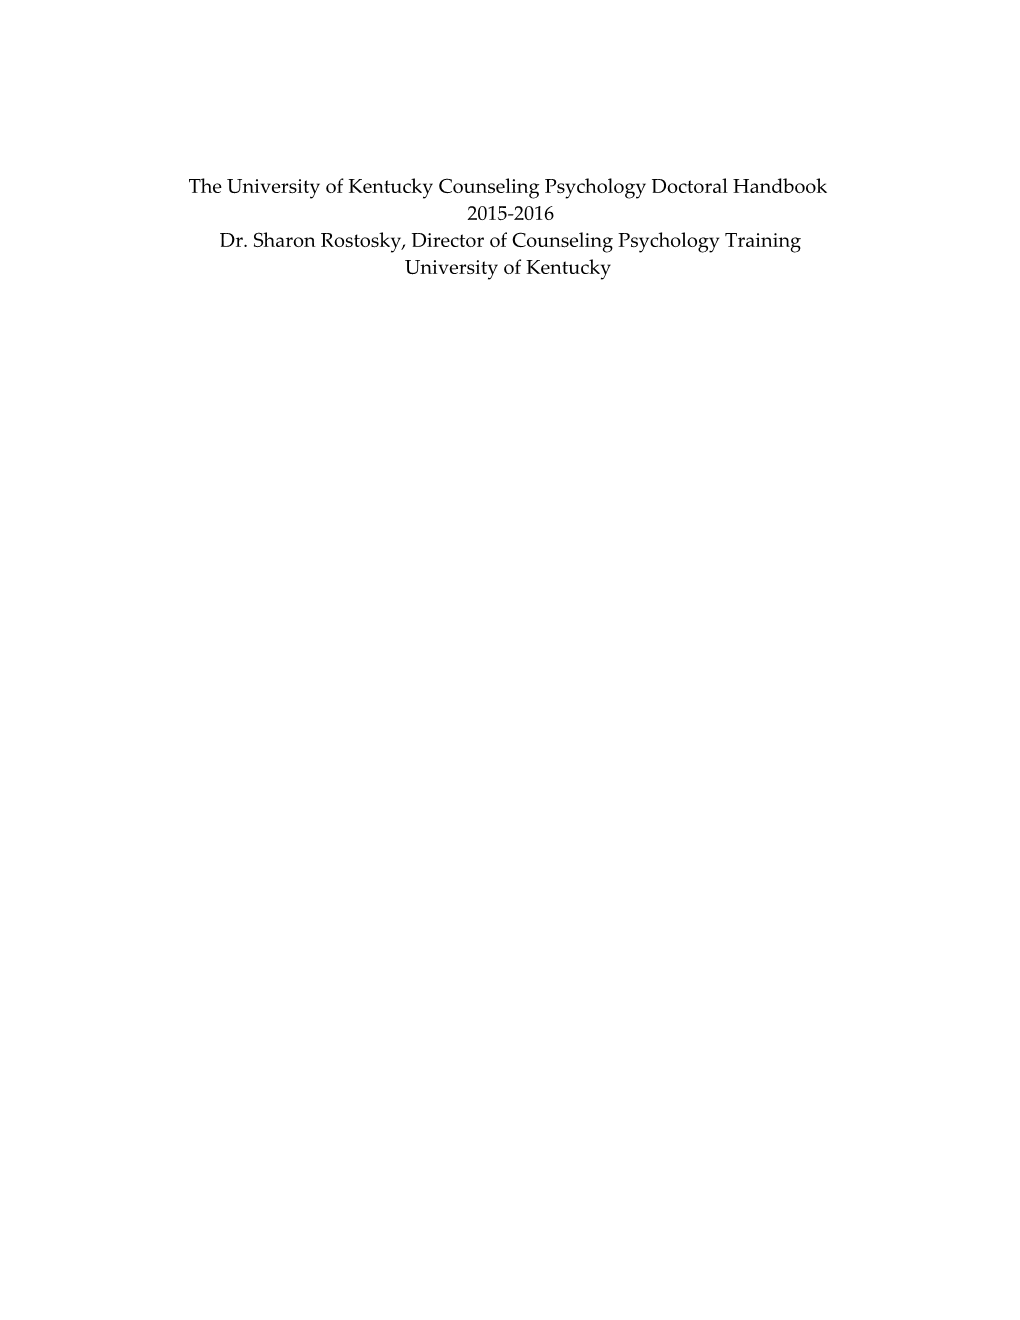 UK Counseling Psychology Doctoral Handbook 2006